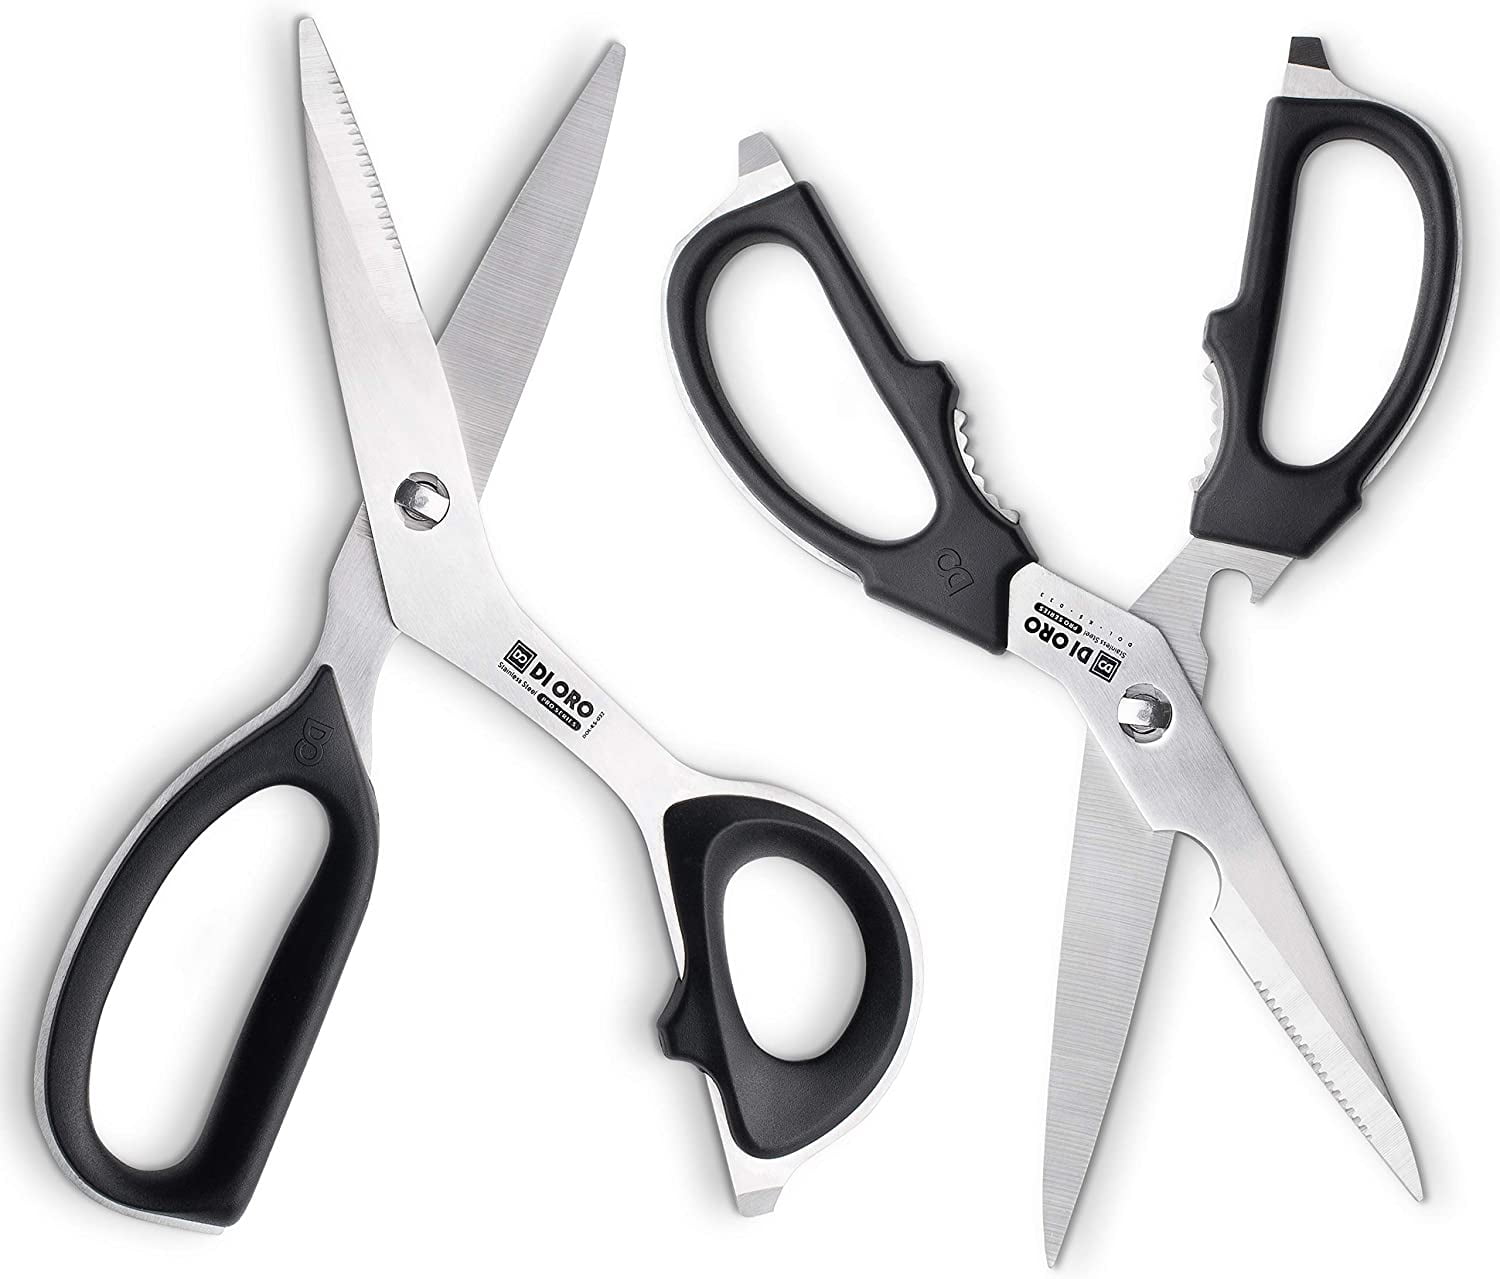 Good Grips Stainless Steel Multi-Purpose Scissors, OXO